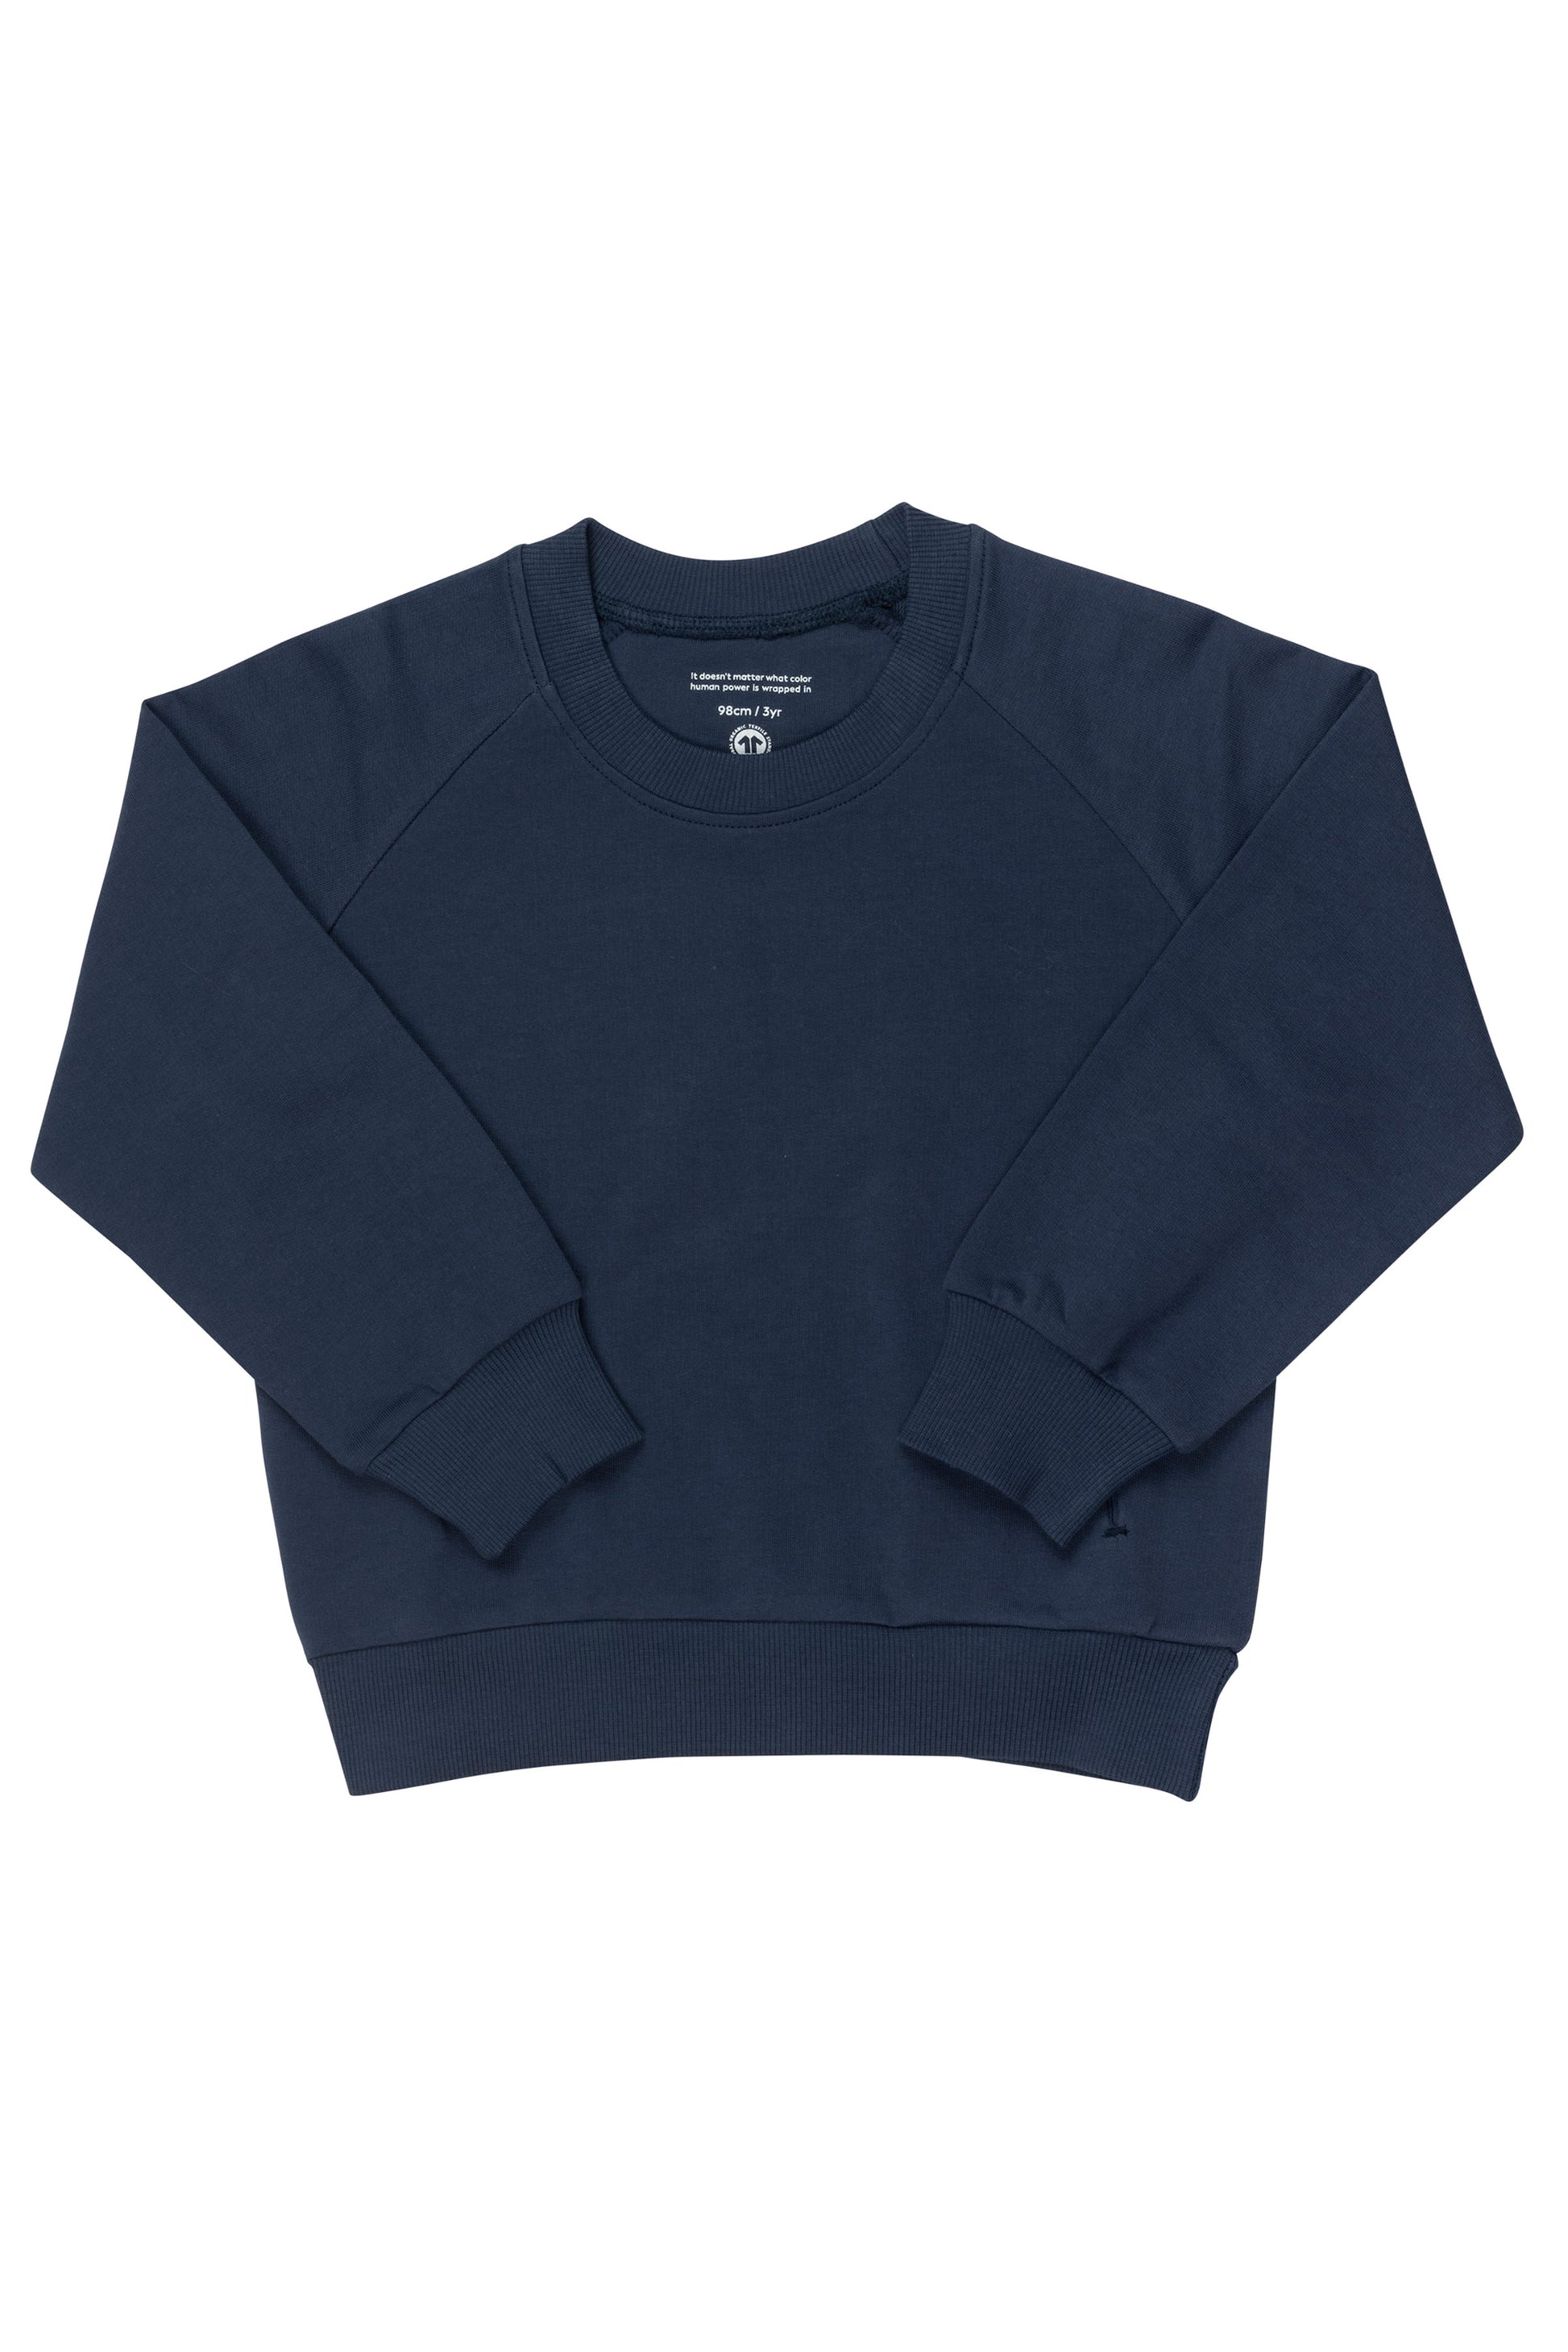 sweater trui blauw Copenhagen colors 100% organisch katoen fairtrade gemaakt babykleding duurzame kinderkleding sustainable kids clothing